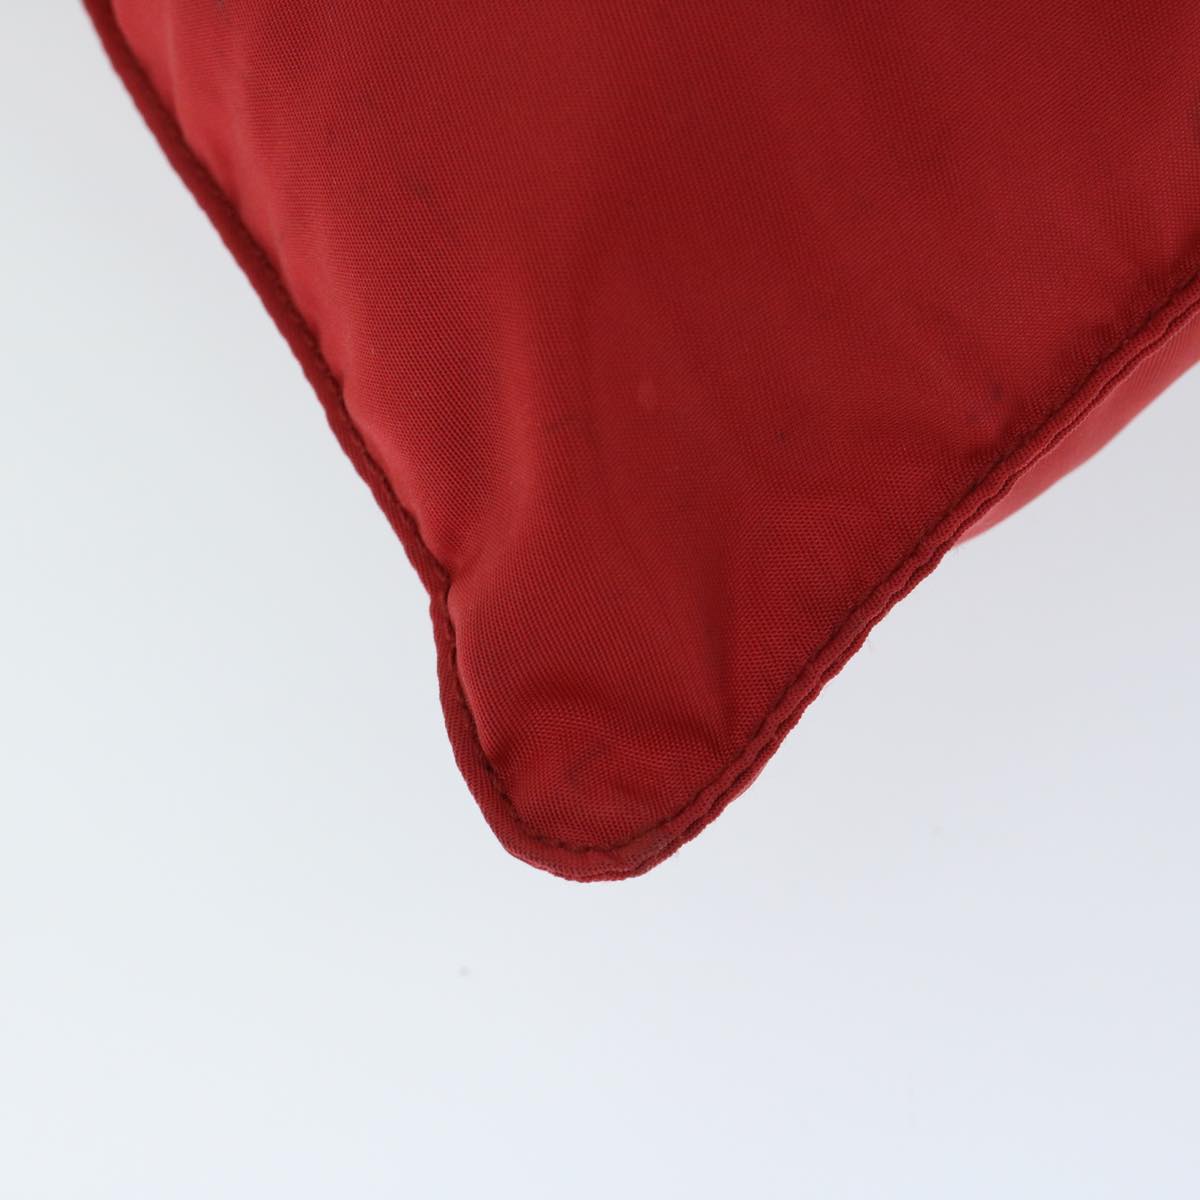 PRADA Shoulder Bag Nylon Red Auth 67048